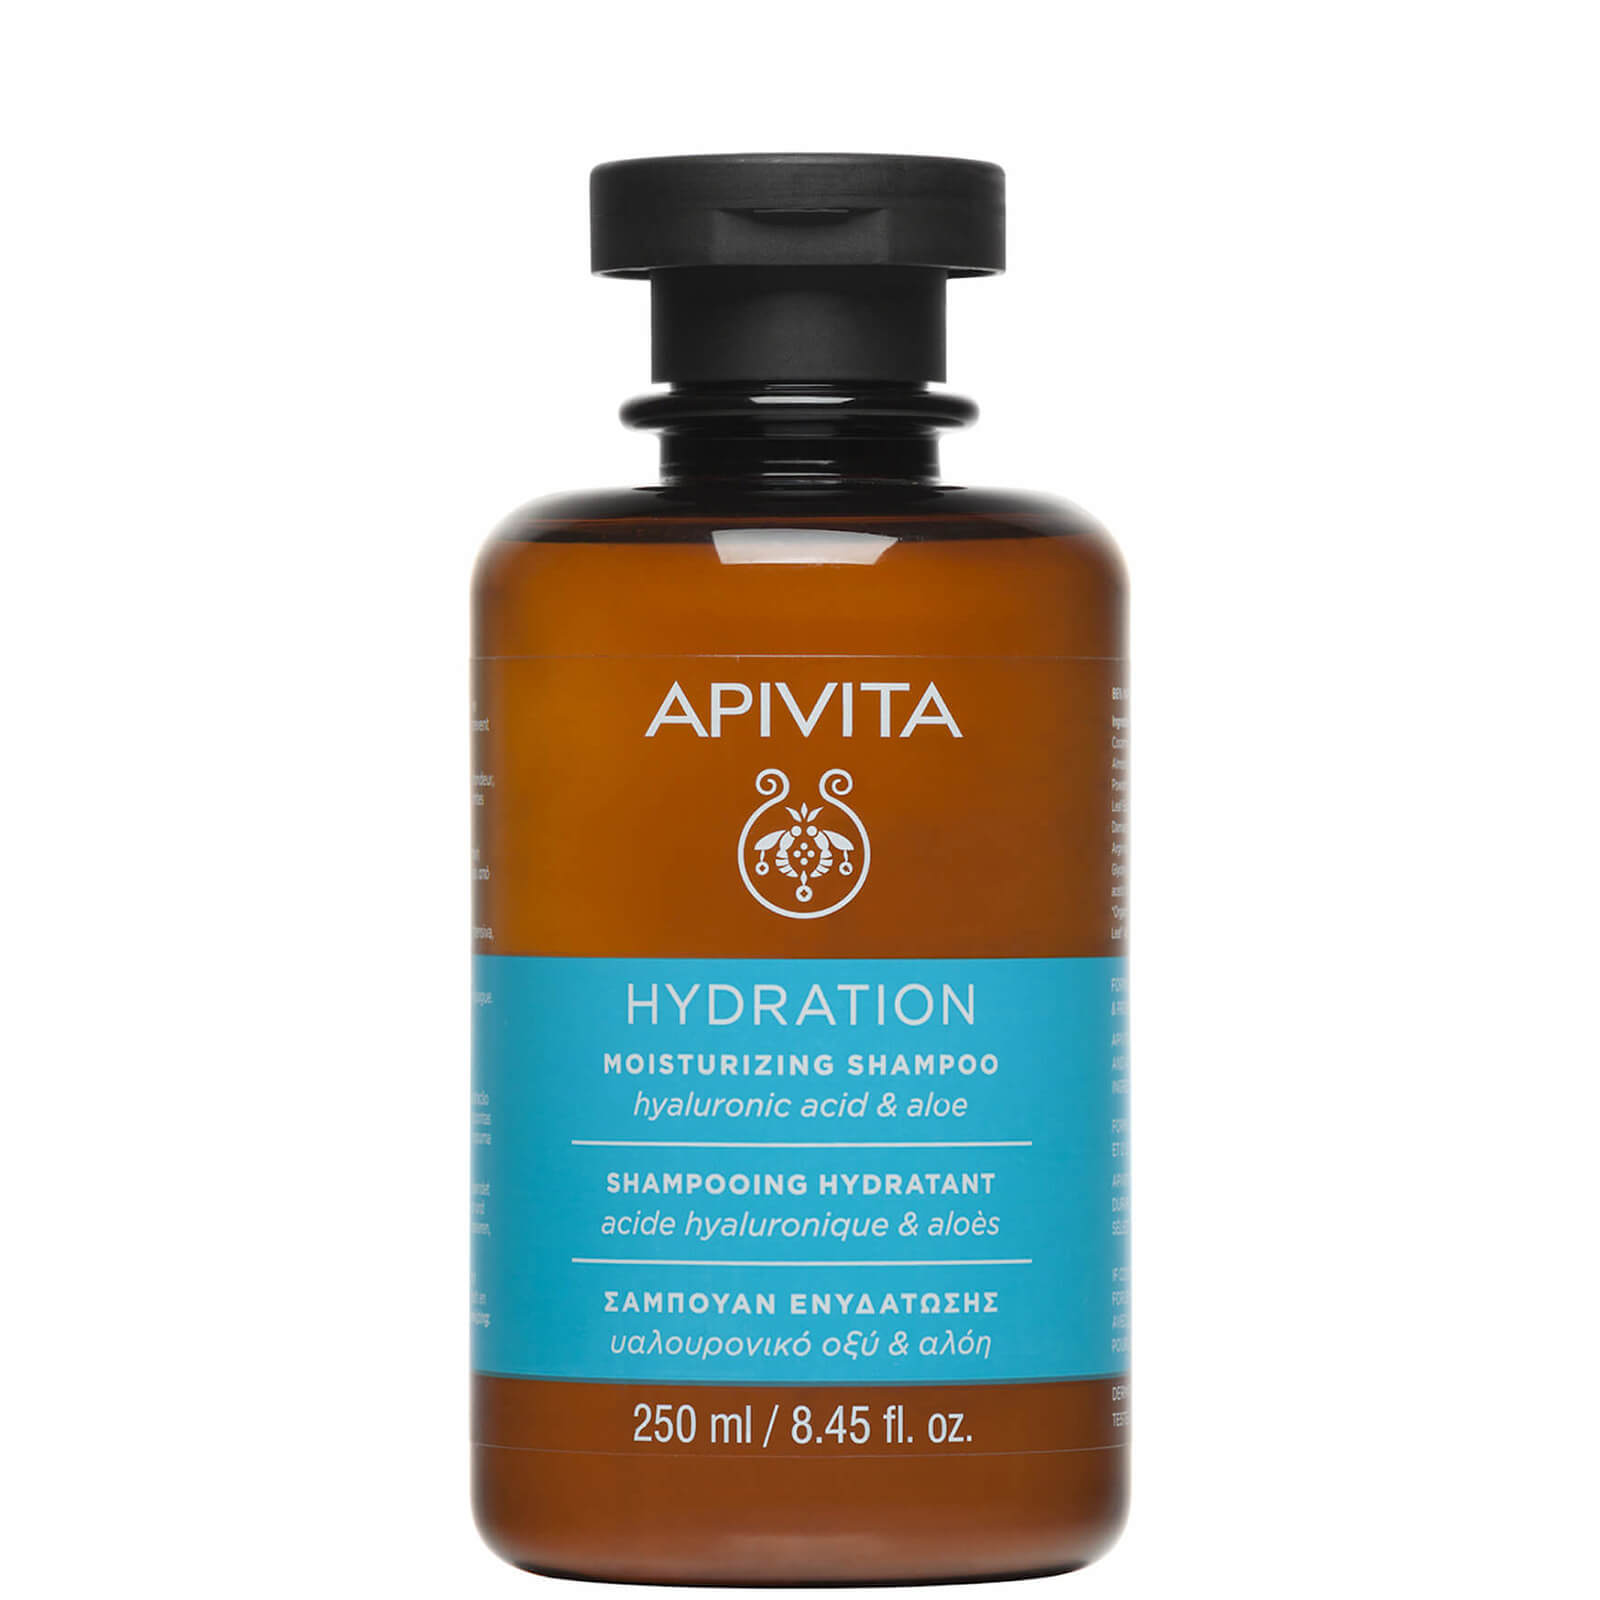 APIVITA 全面护发系列保湿洗发水 250ml | 透明质酸和芦荟